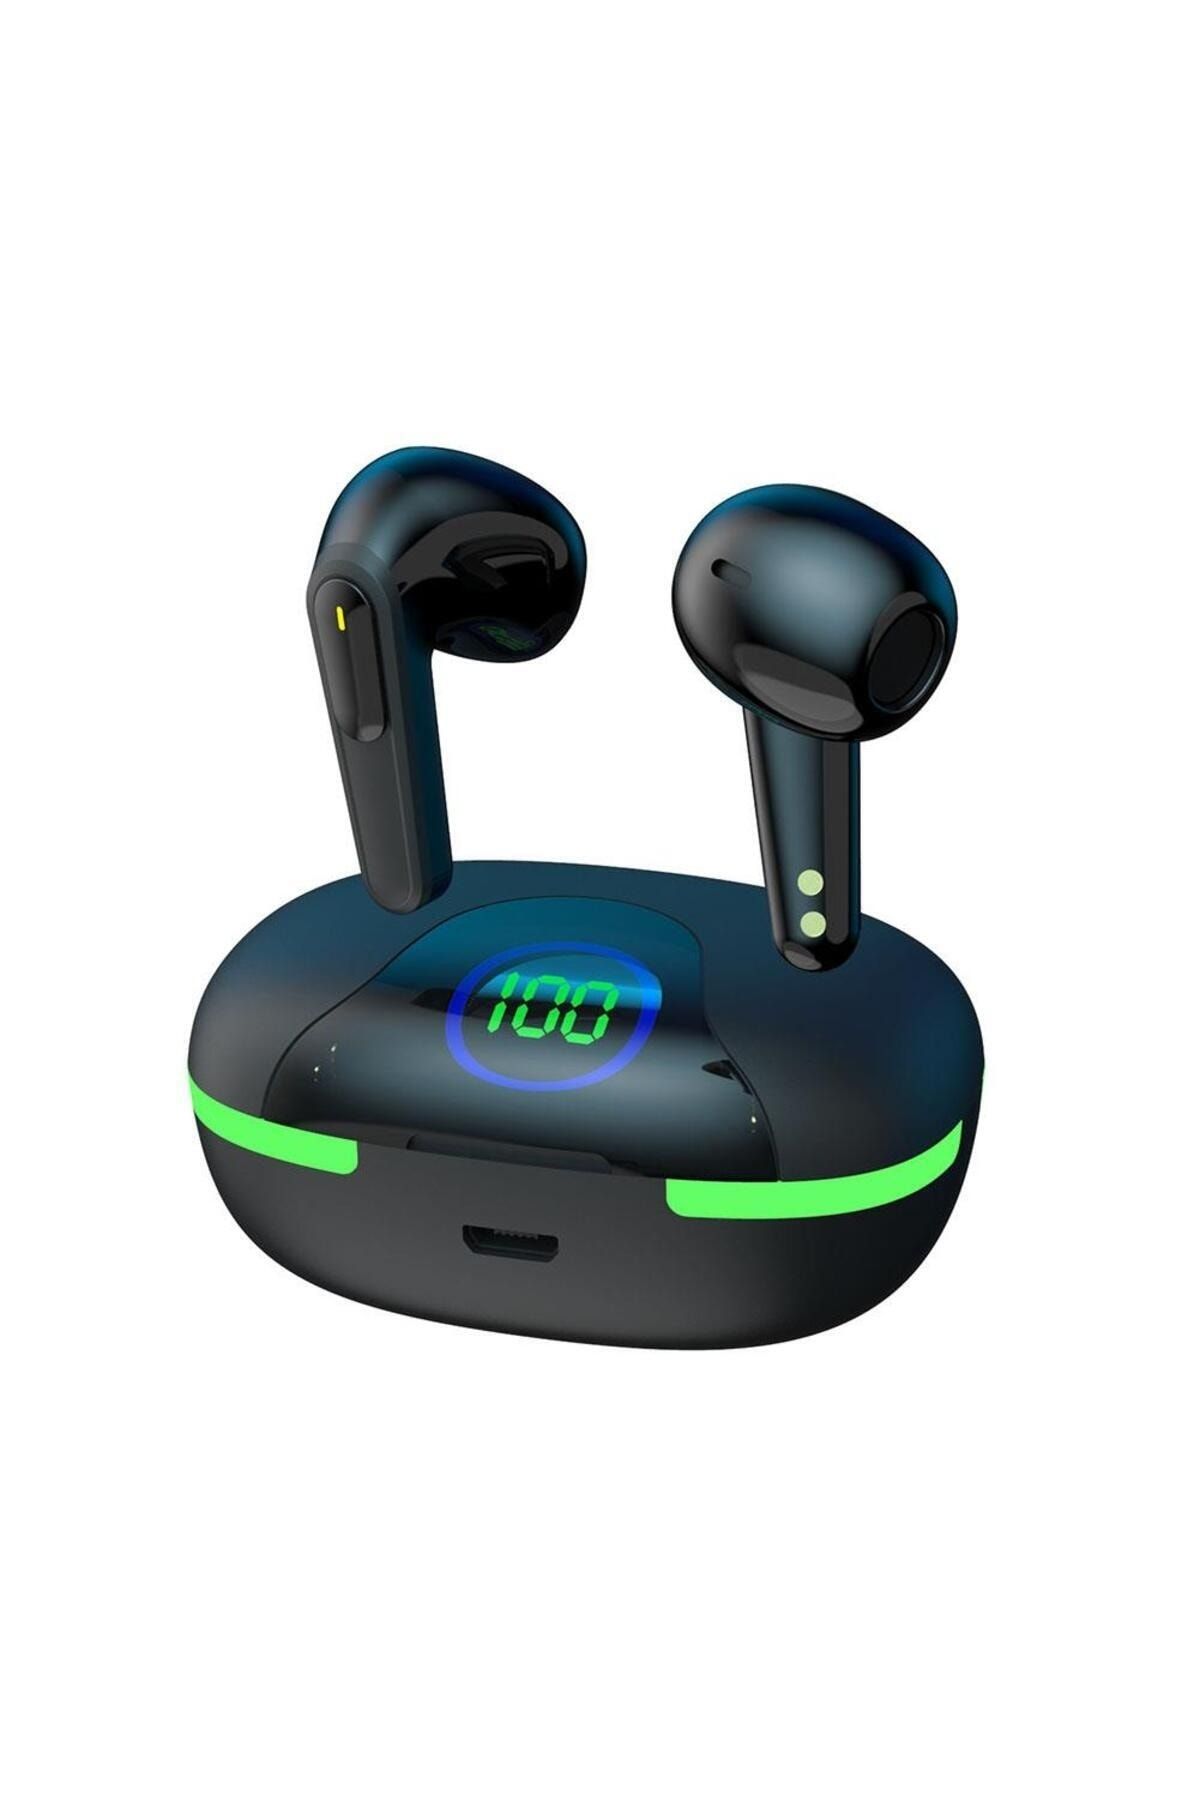 Torima Pro 80 Şarj Göstergeli Kablosuz Gaming Kulakiçi Bluetooth Kulaklık V5.3